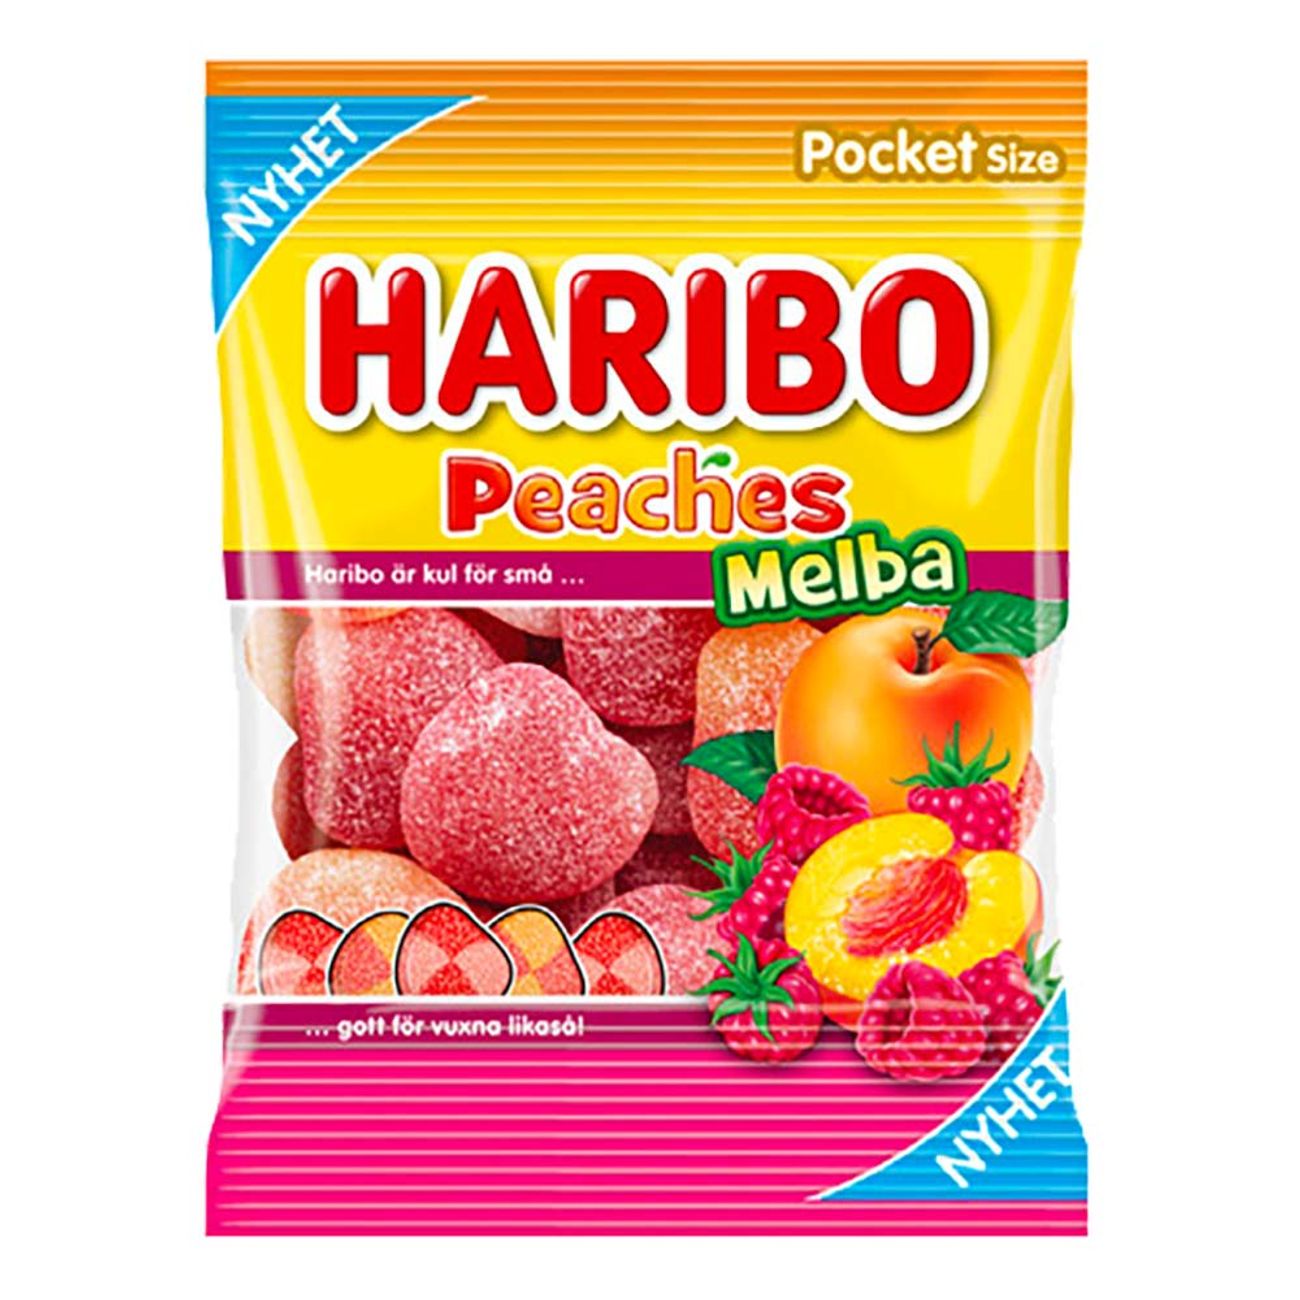 haribo-peaches-melba-godispase-94921-1